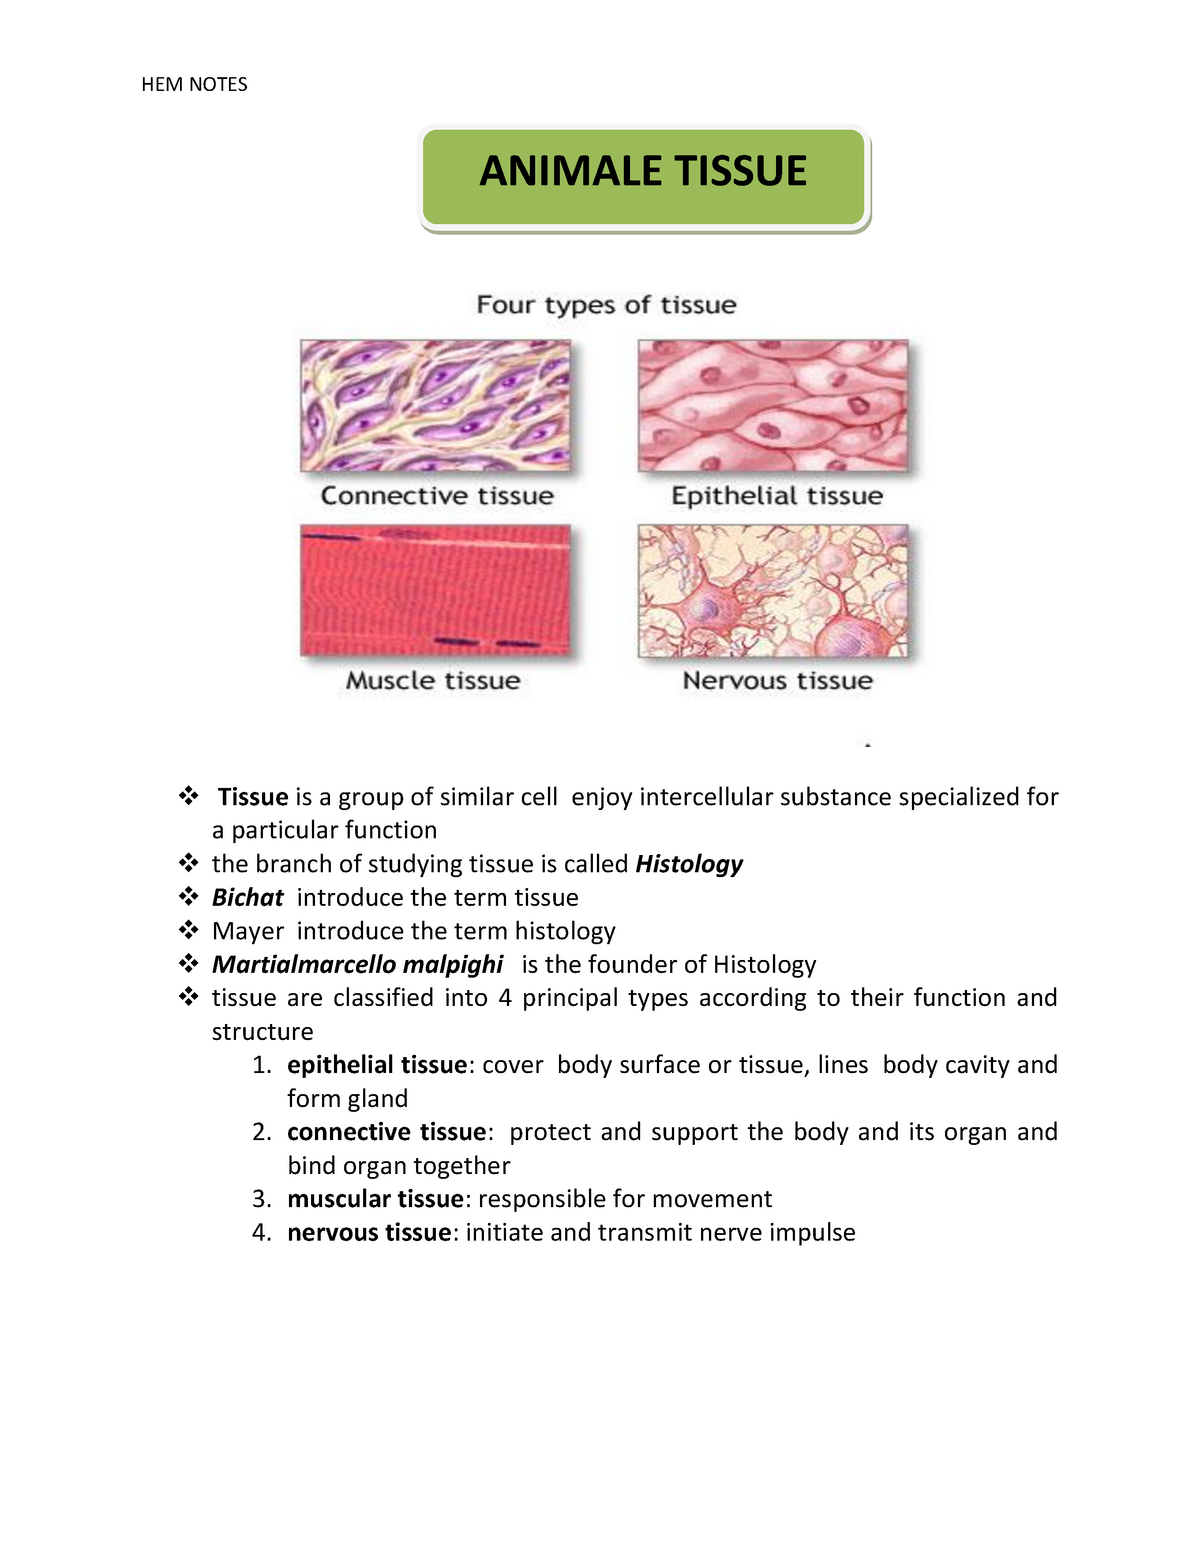 Types of Animal tissue - HEM NOTES ANIMALE TISSUE Tissue is a group of  similar cell enjoy - Studocu